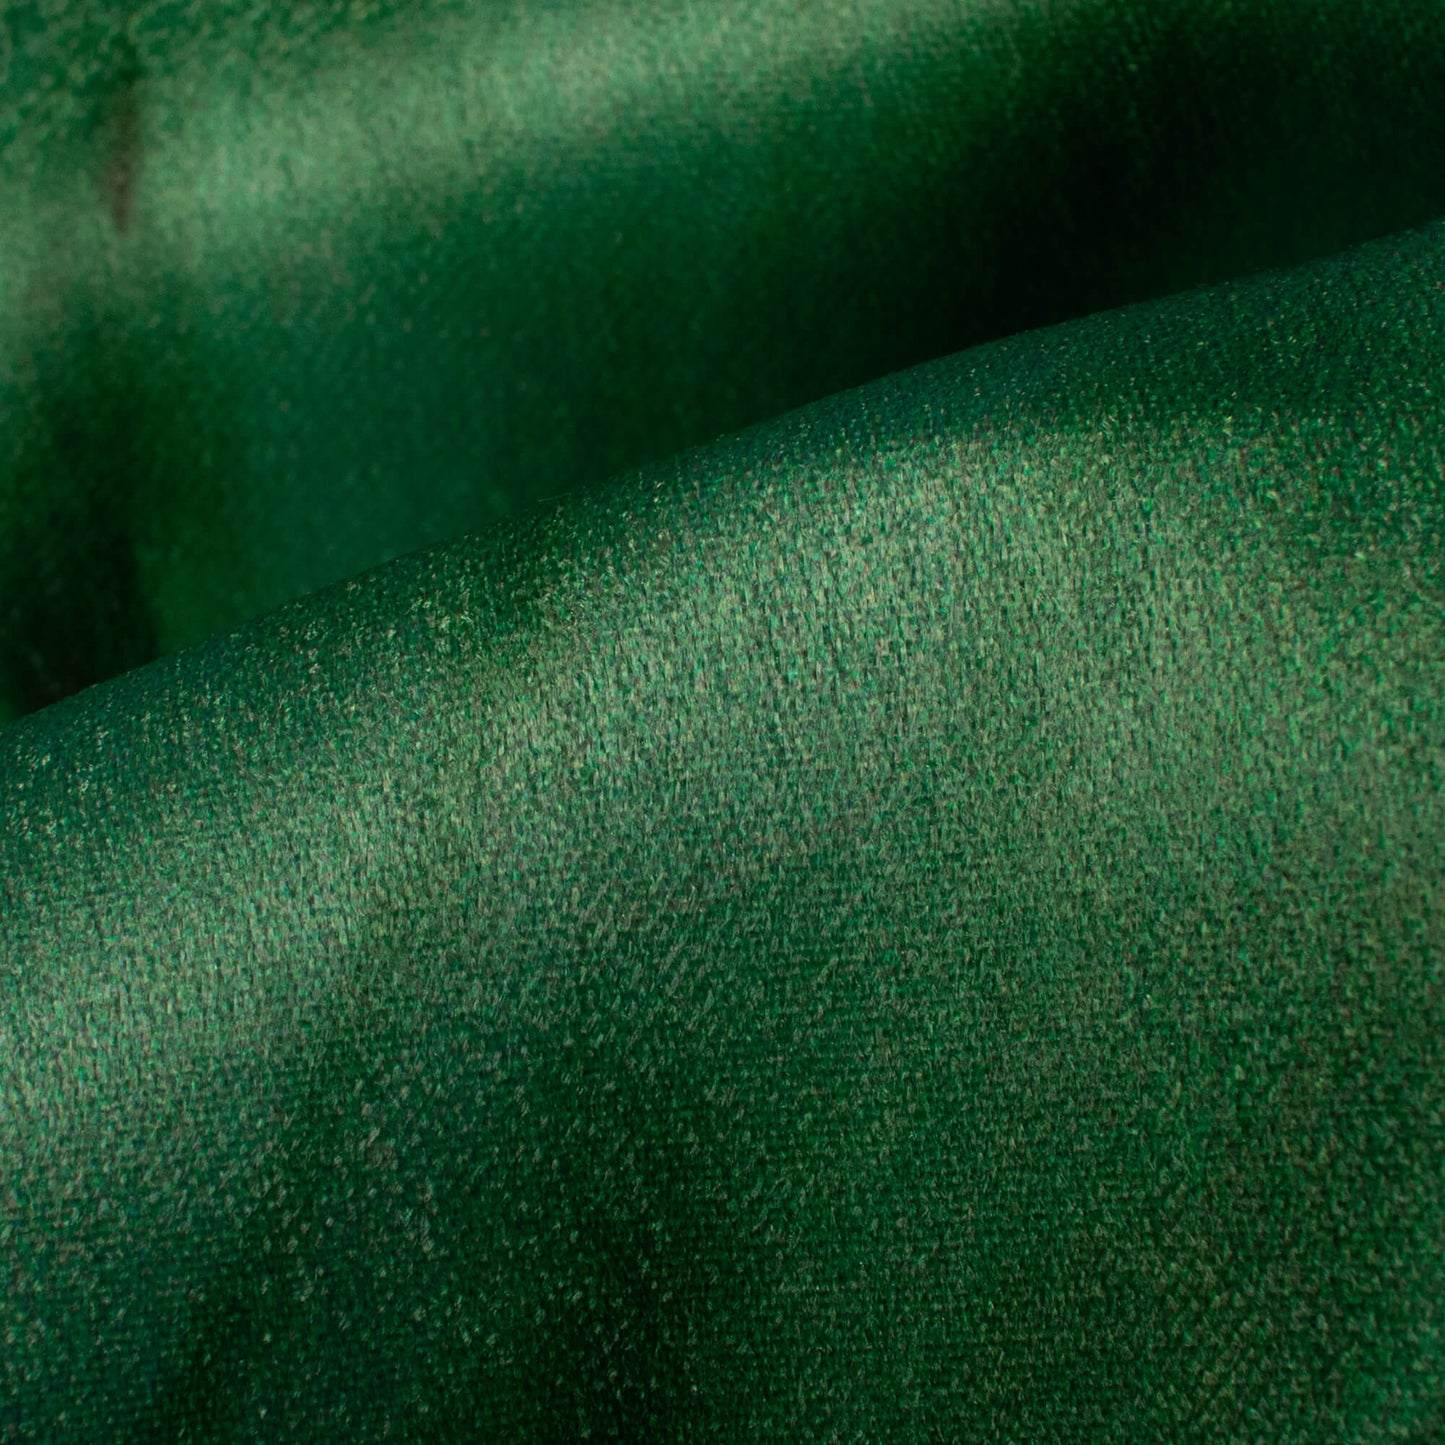 Forest Green Marble Pattern Digital Print Lush Satin Fabric